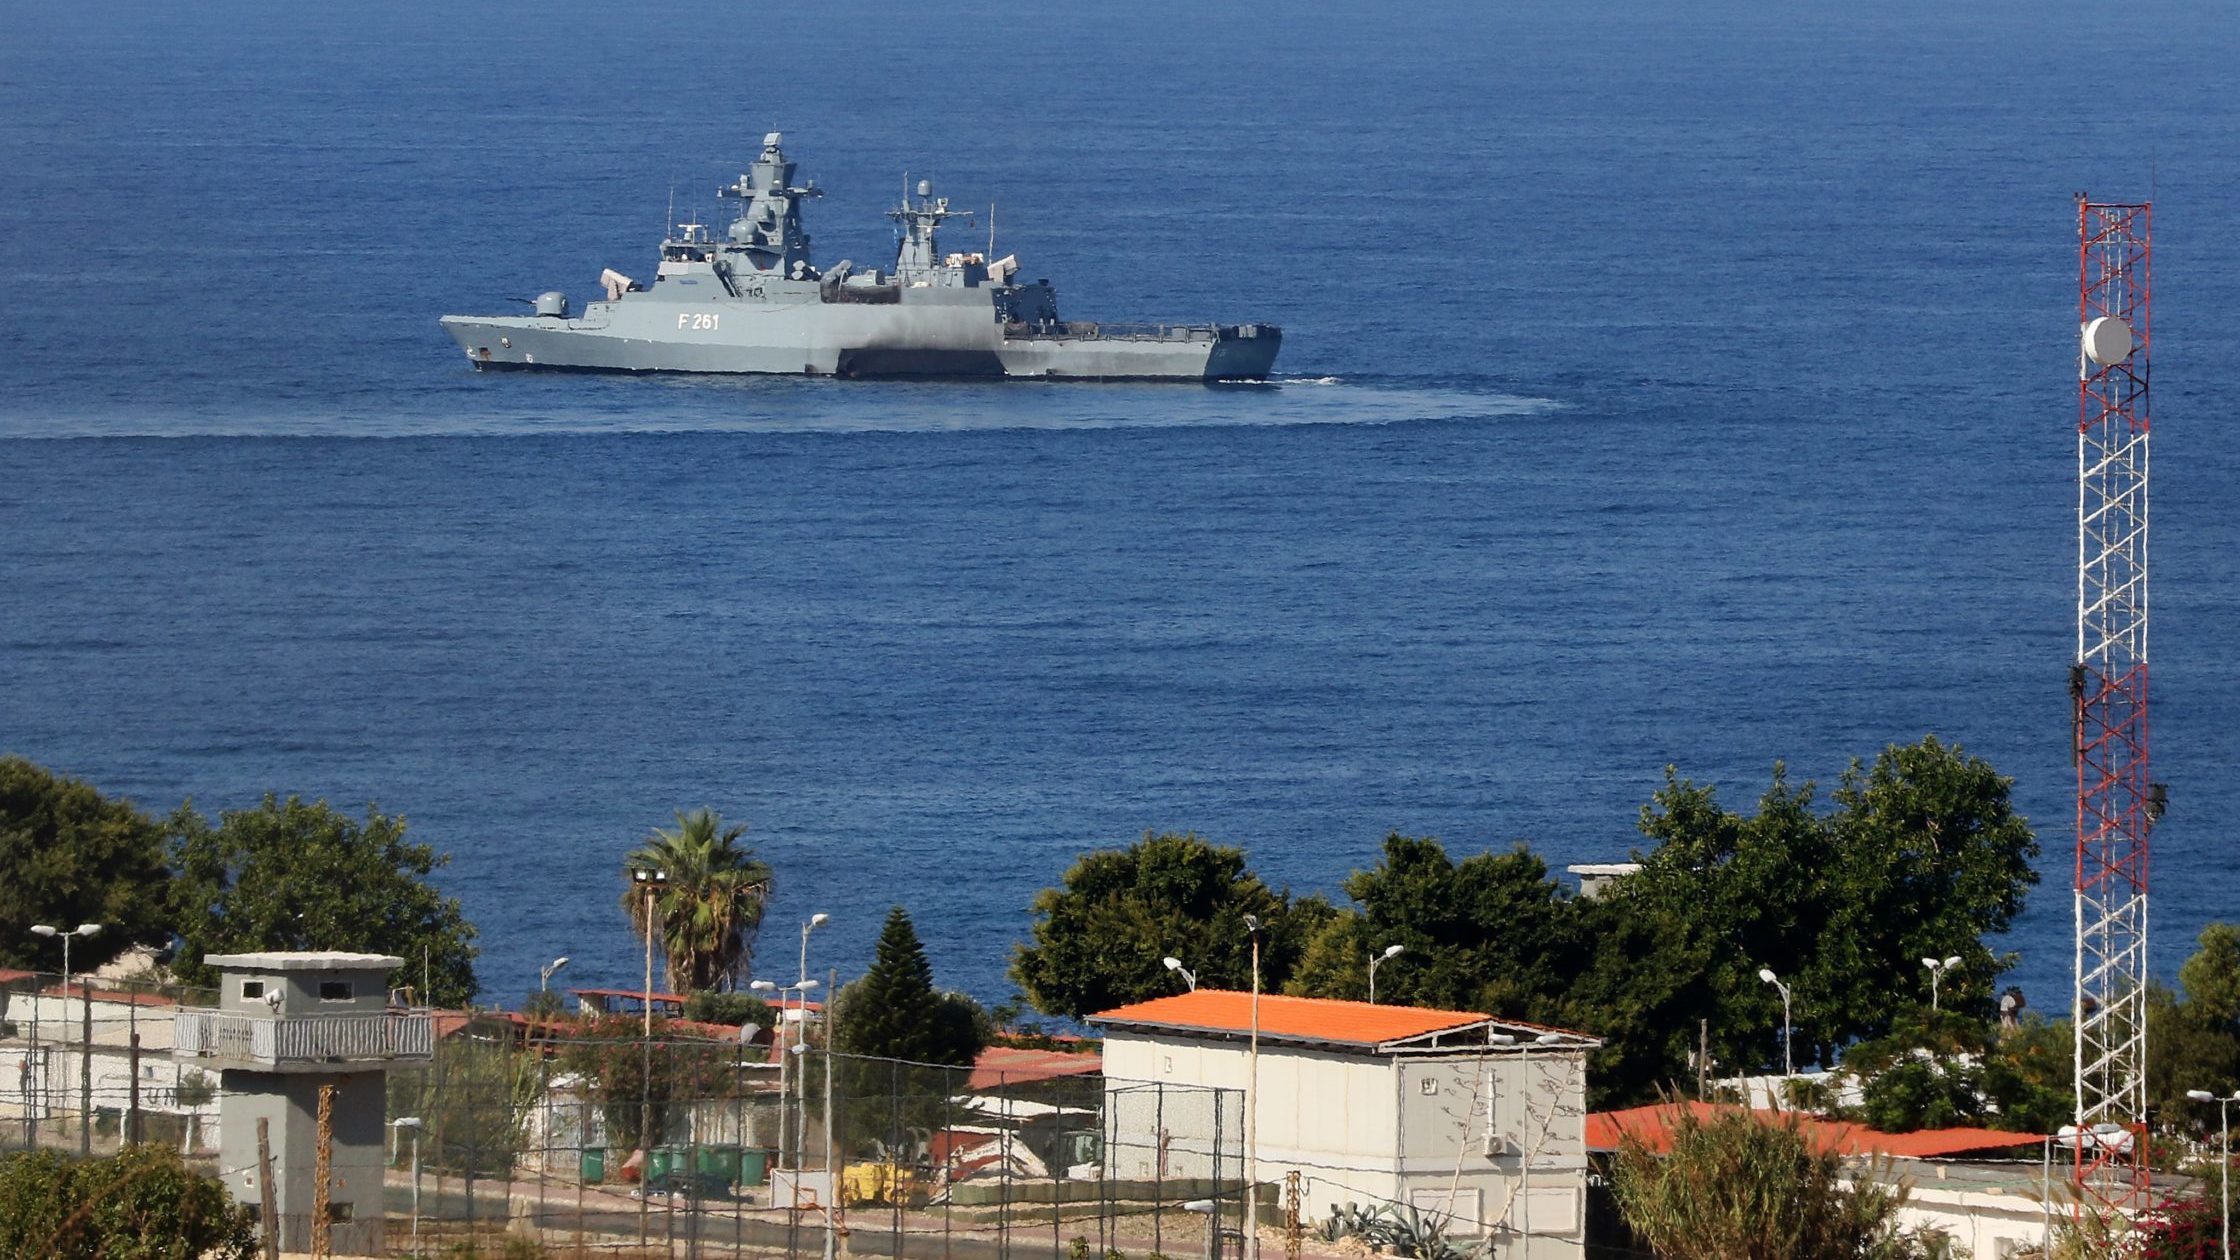 Lebanon, Israel Begin Long-awaited Sea-border Talks